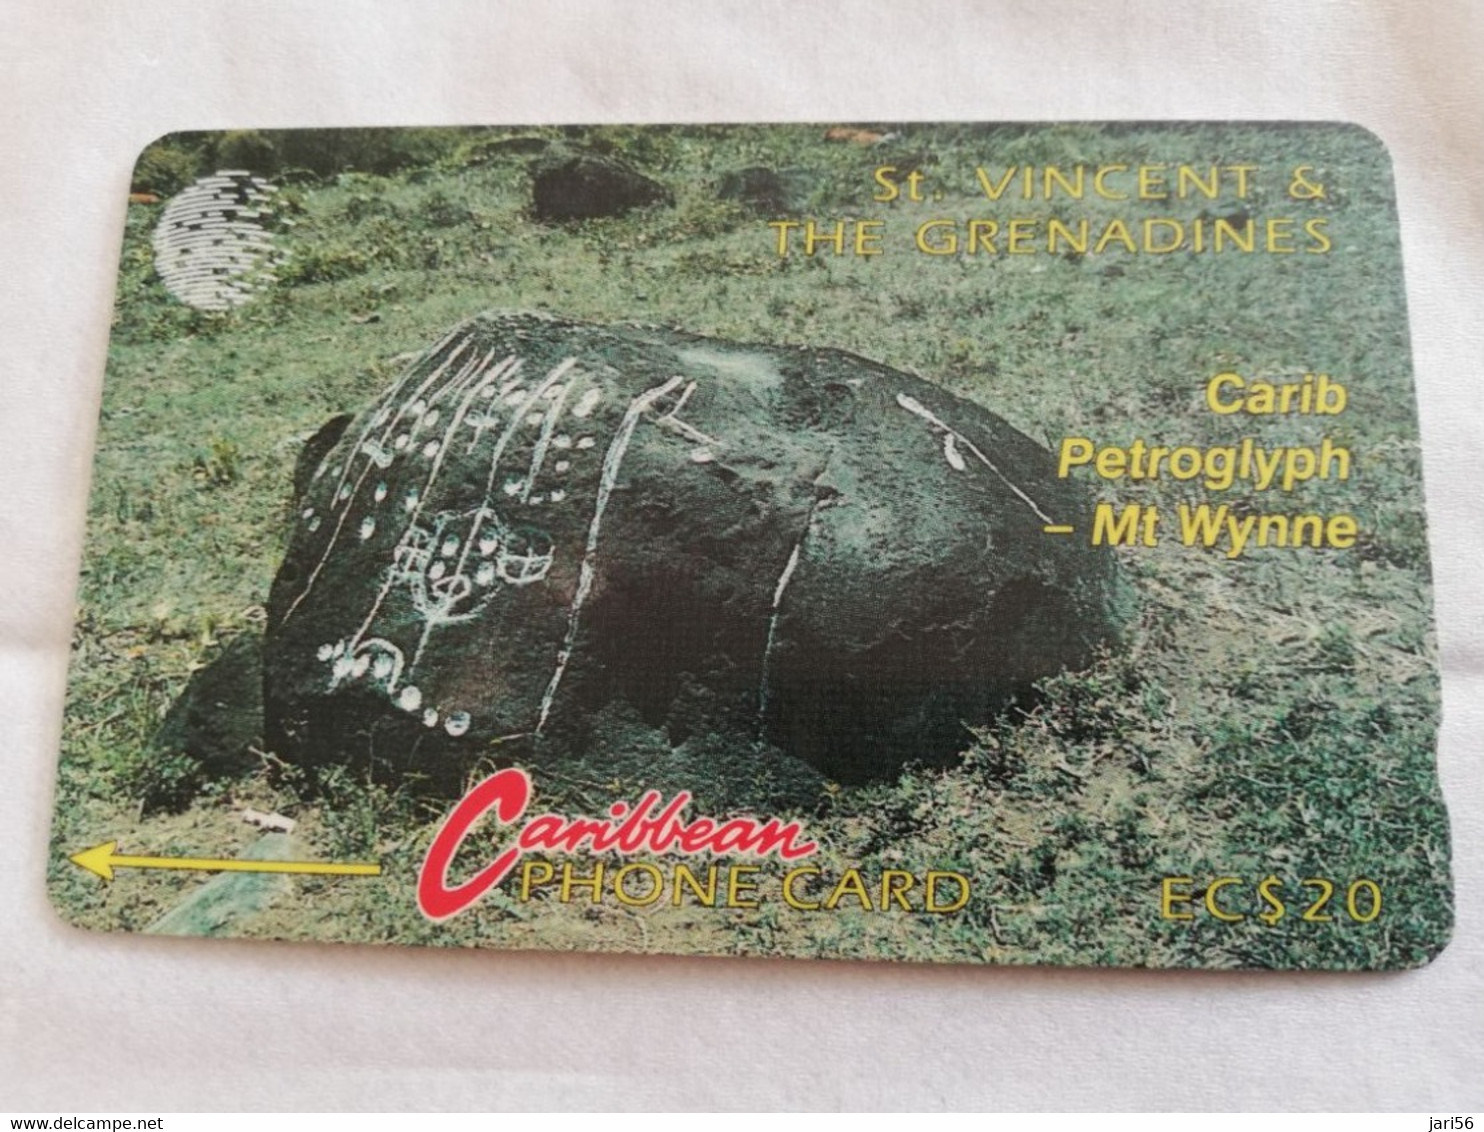 ST VINCENT & GRENADINES  GPT CARD   $ 20,-  5CSVB  CARIB PETROGLYPH     C&W    Fine Used  Card  **5644 ** - San Vicente Y Las Granadinas